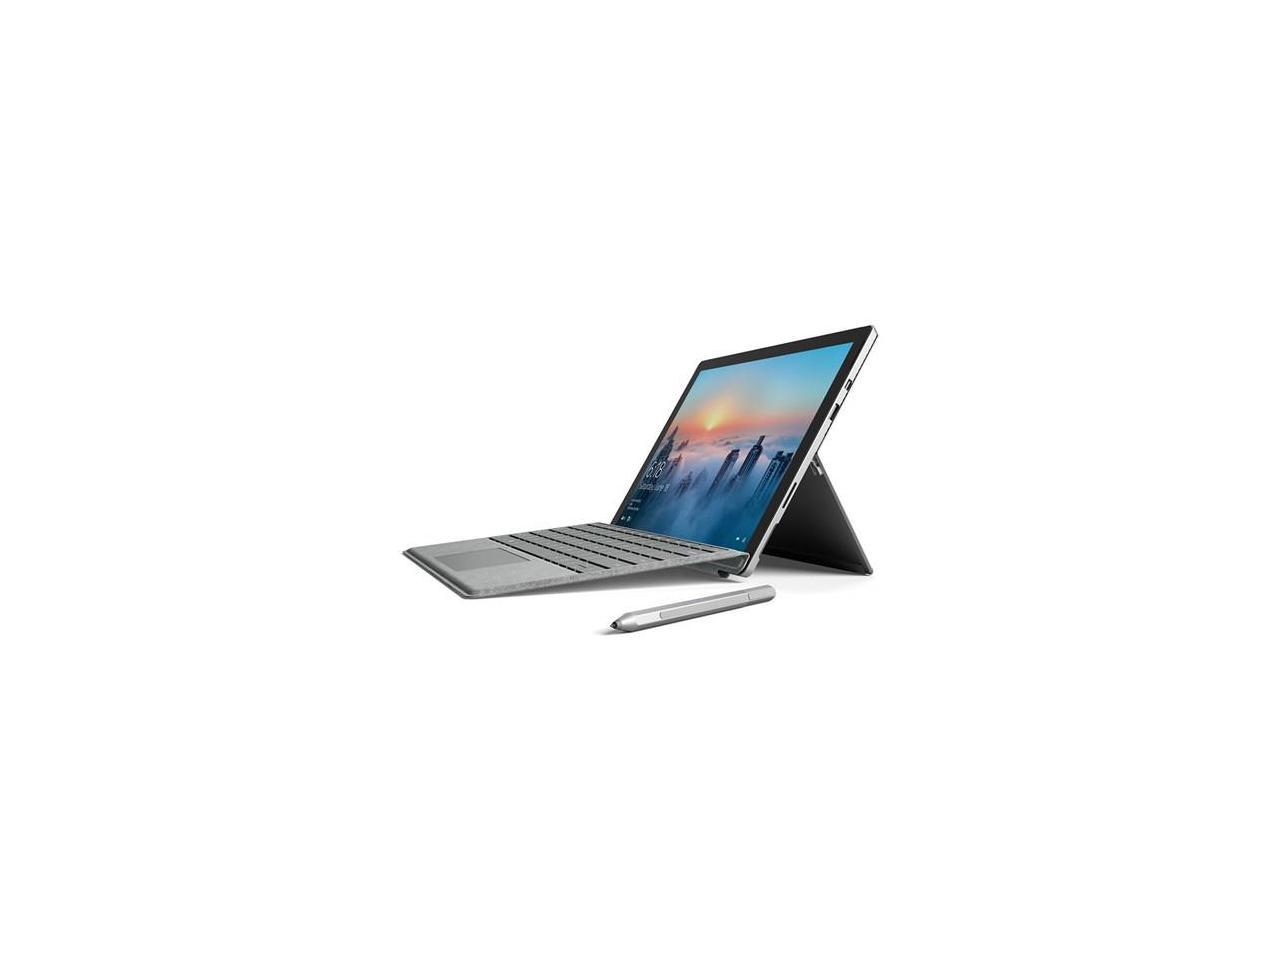 Microsoft Surface Pro 4 CR3-00027 2-in-1 Laptop Intel Core i5 